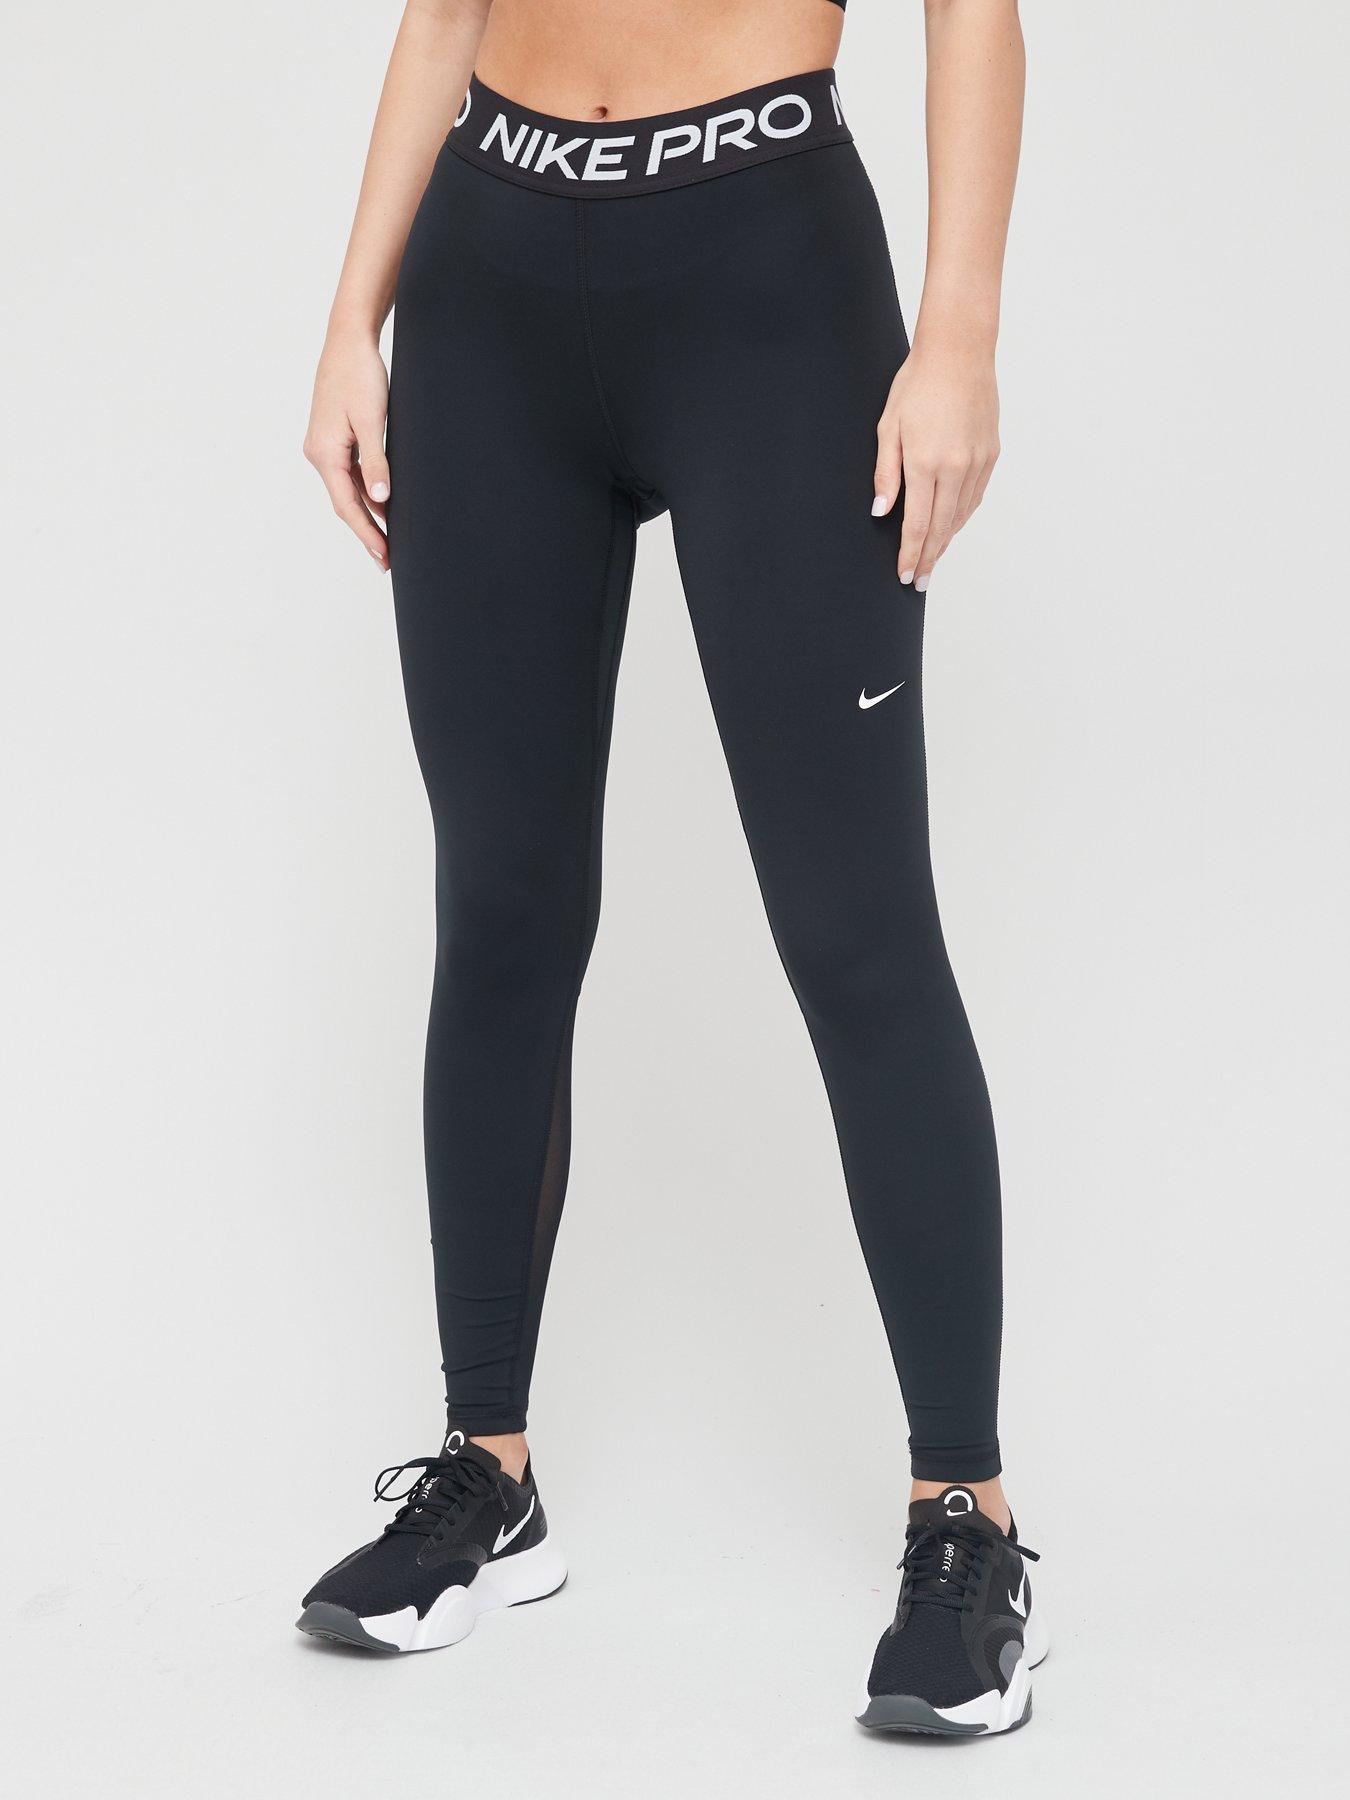 Nike 'Just Do It' leggings black - Nike - Purchase on Ventis.